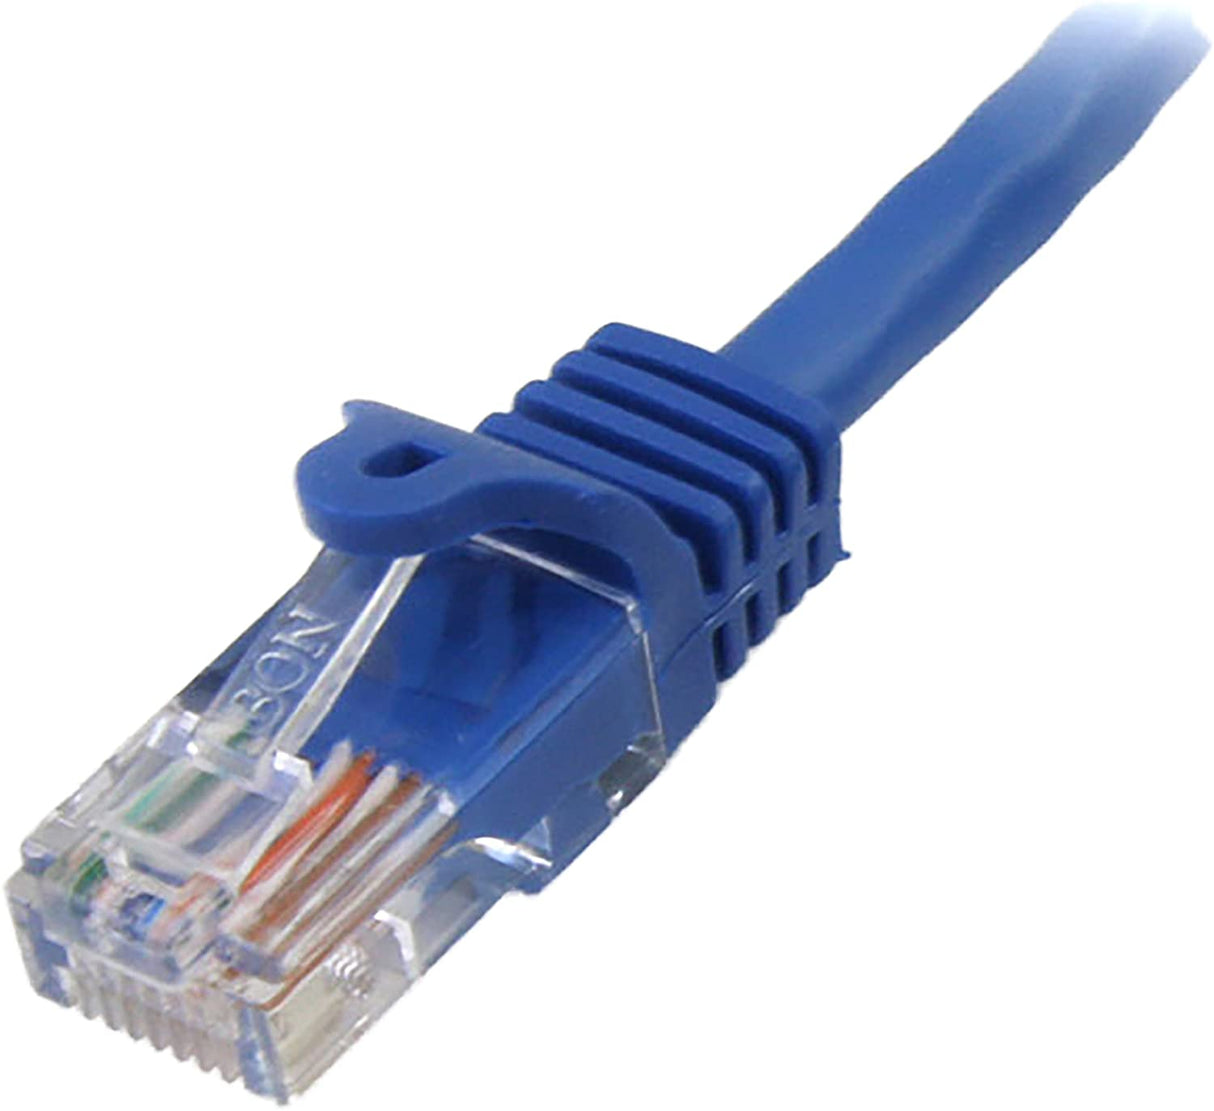 StarTech.com Cat5e Ethernet Cable5 ft - Blue - Patch Cable - Snagless Cat5e Cable - Short Network Cable - Ethernet Cord - Cat 5e Cable - 5ft 5 ft / 1.5m Blue